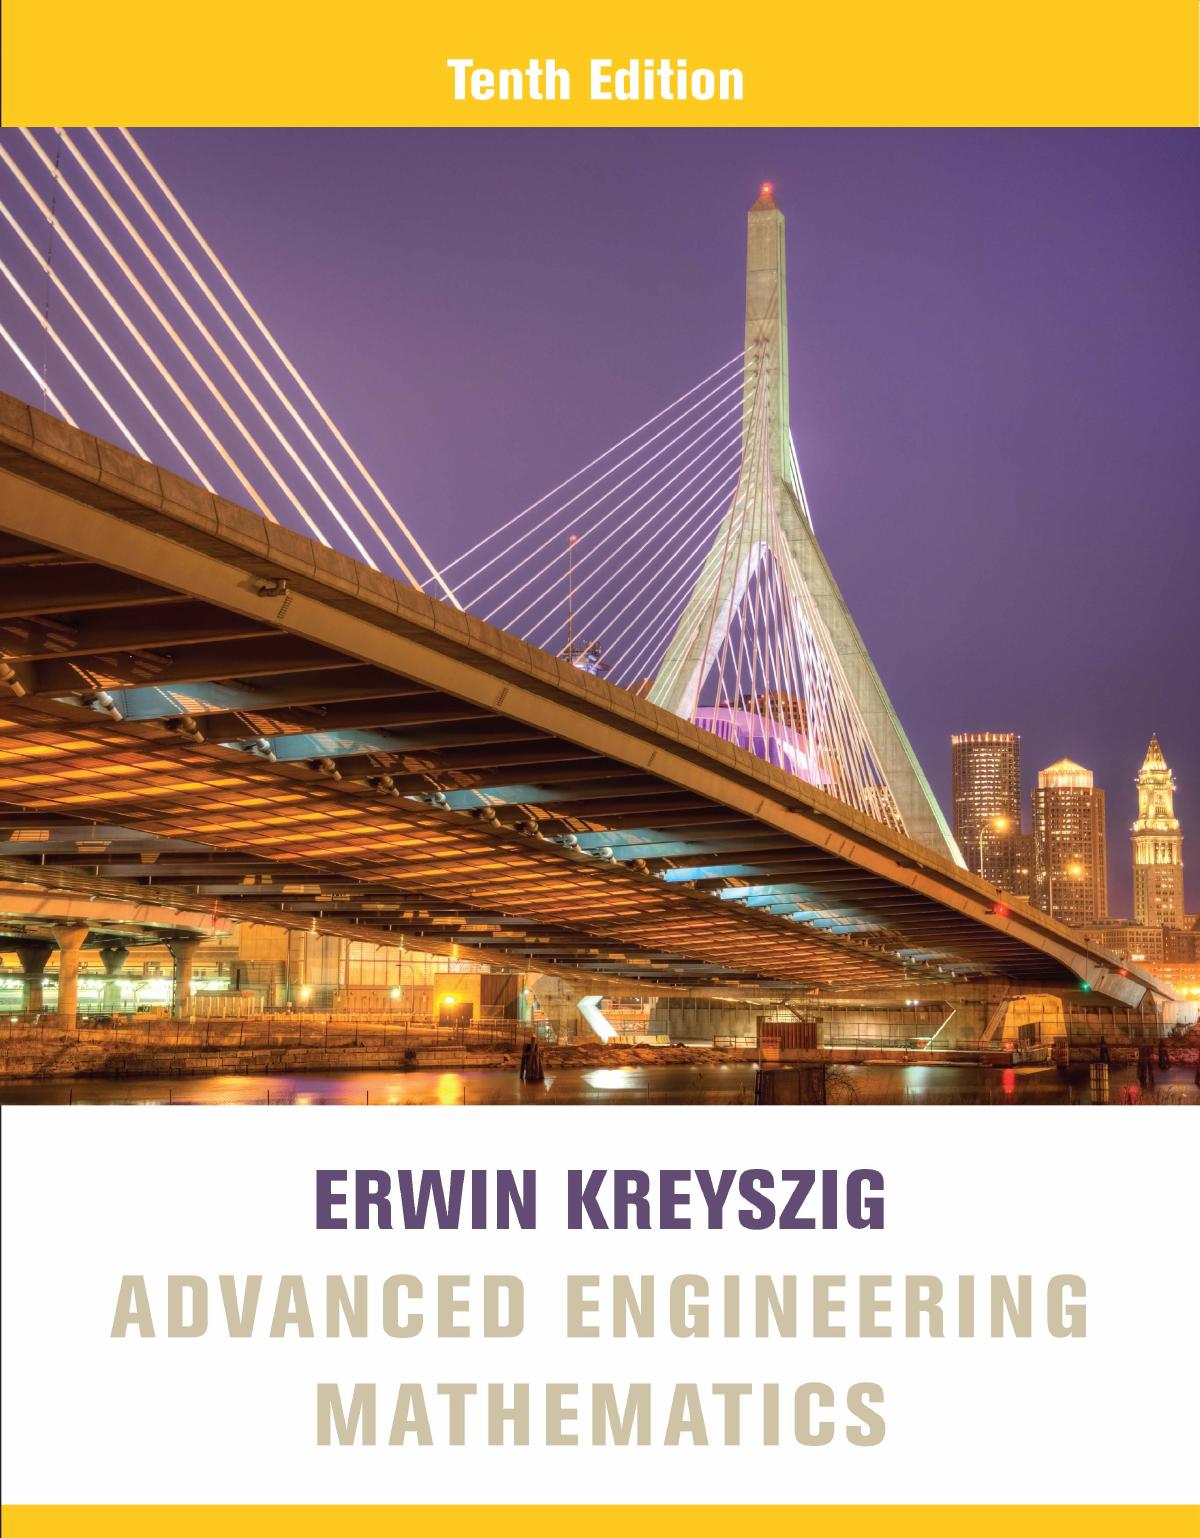 Advanced Engineering Mathematics, 10th ed 2011